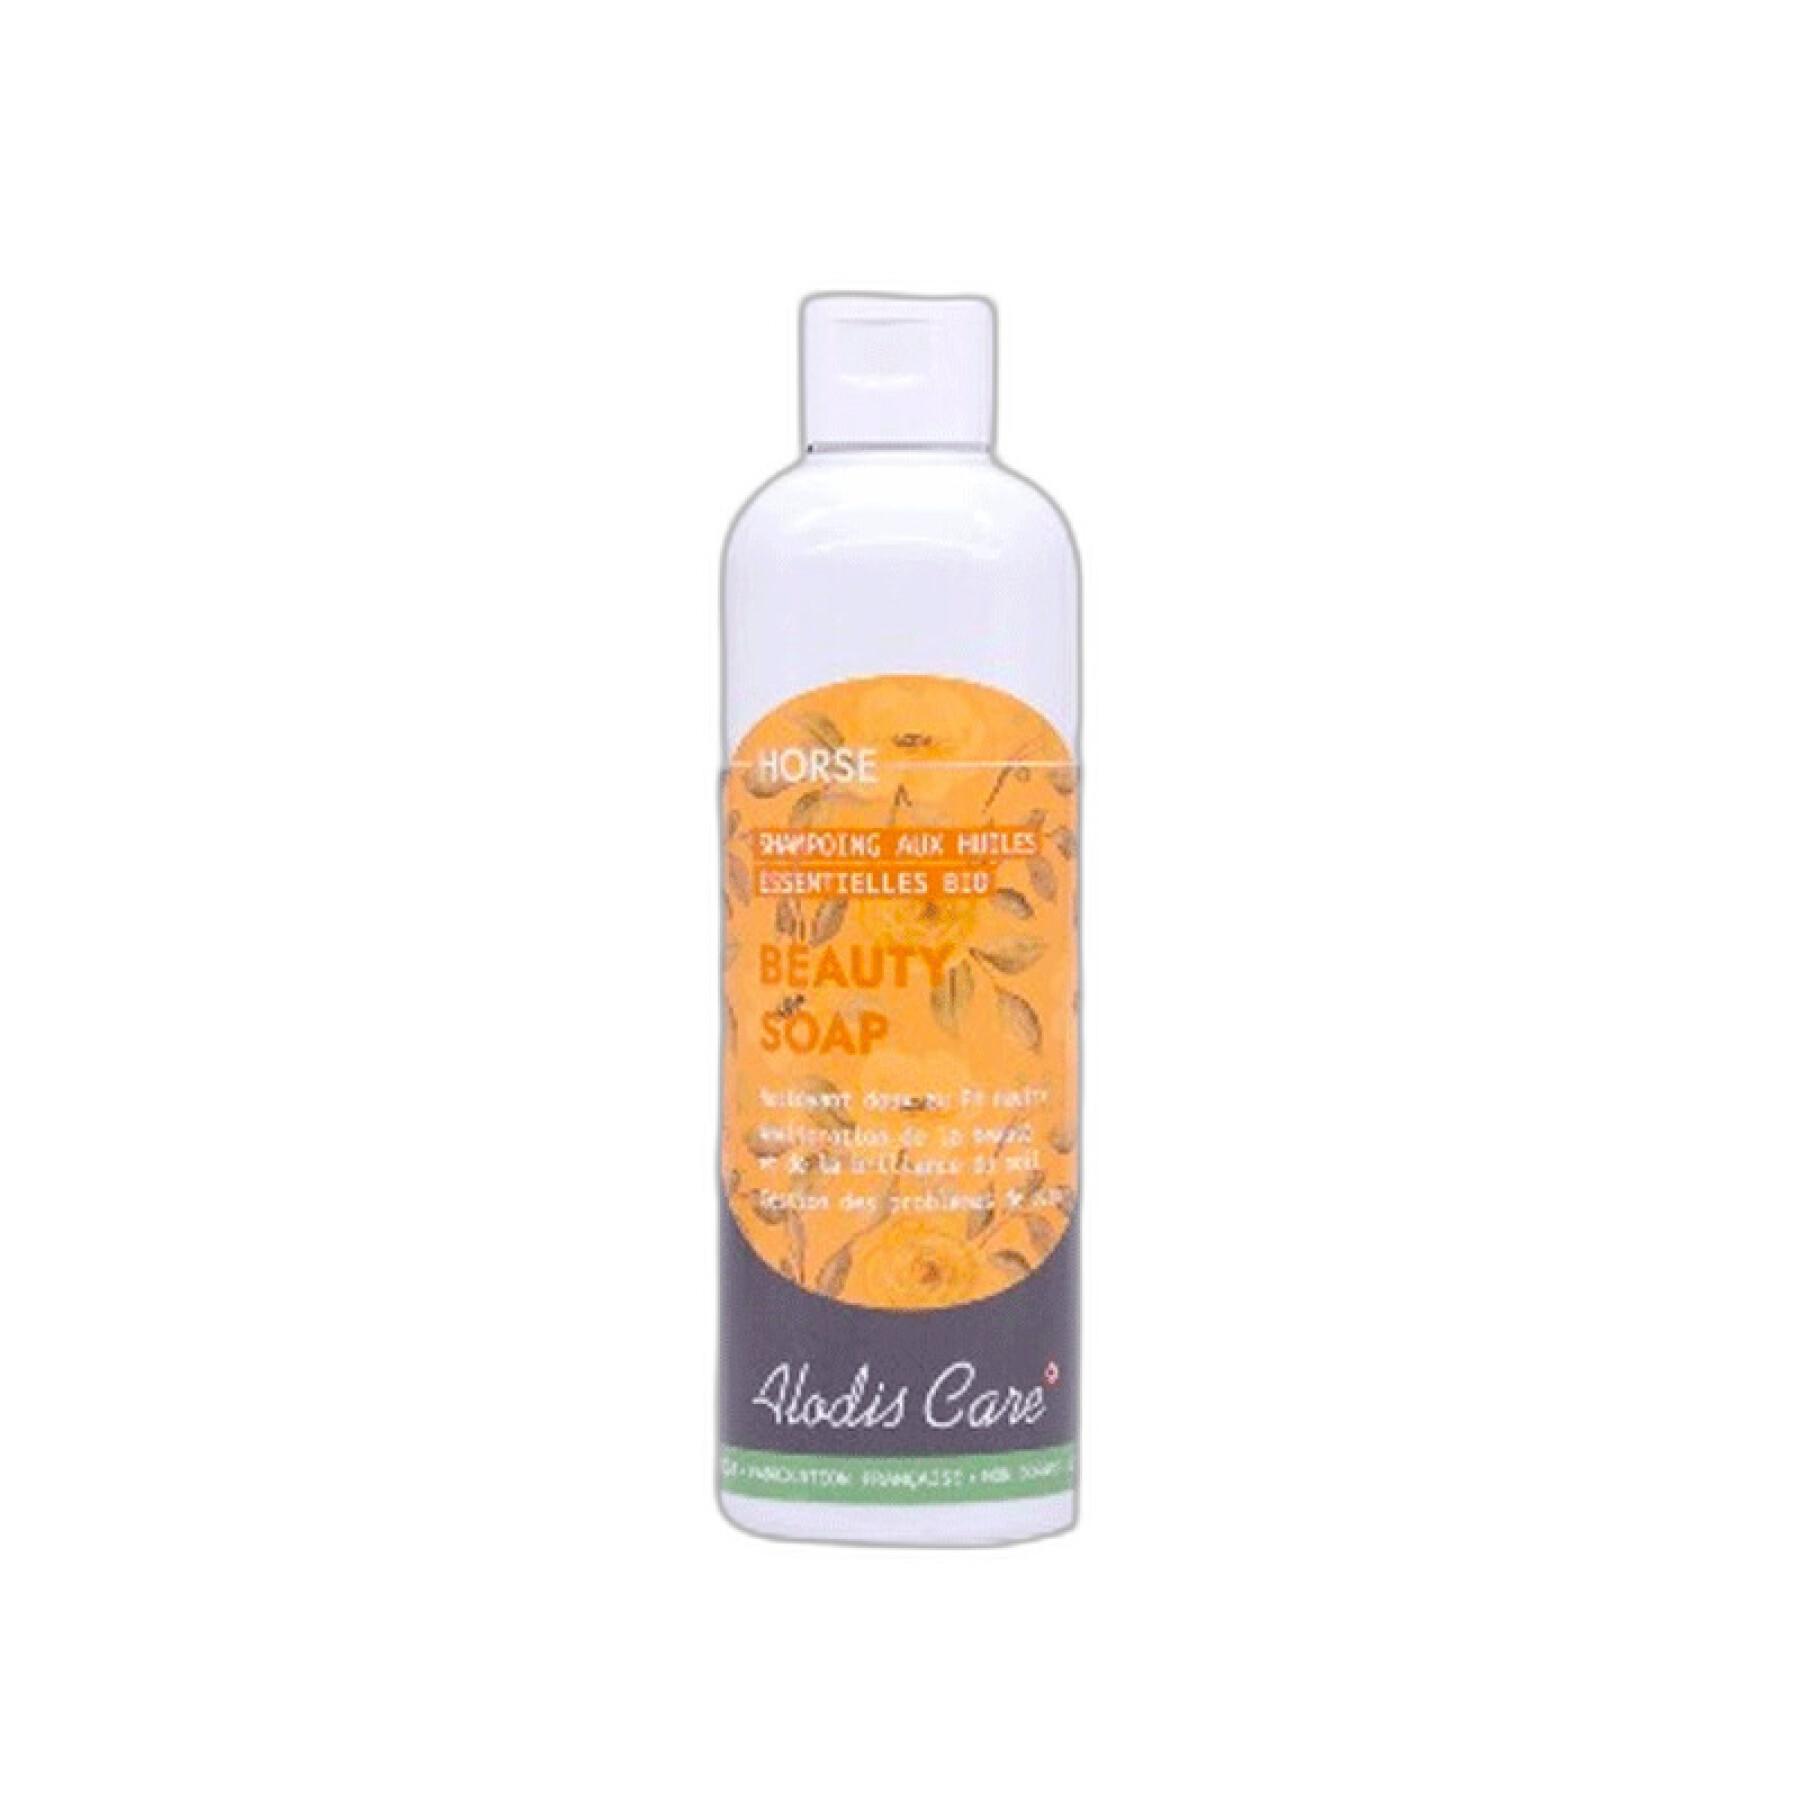 Shampoo für Pferde bei Hautproblemen Alodis Care Beauty Soap